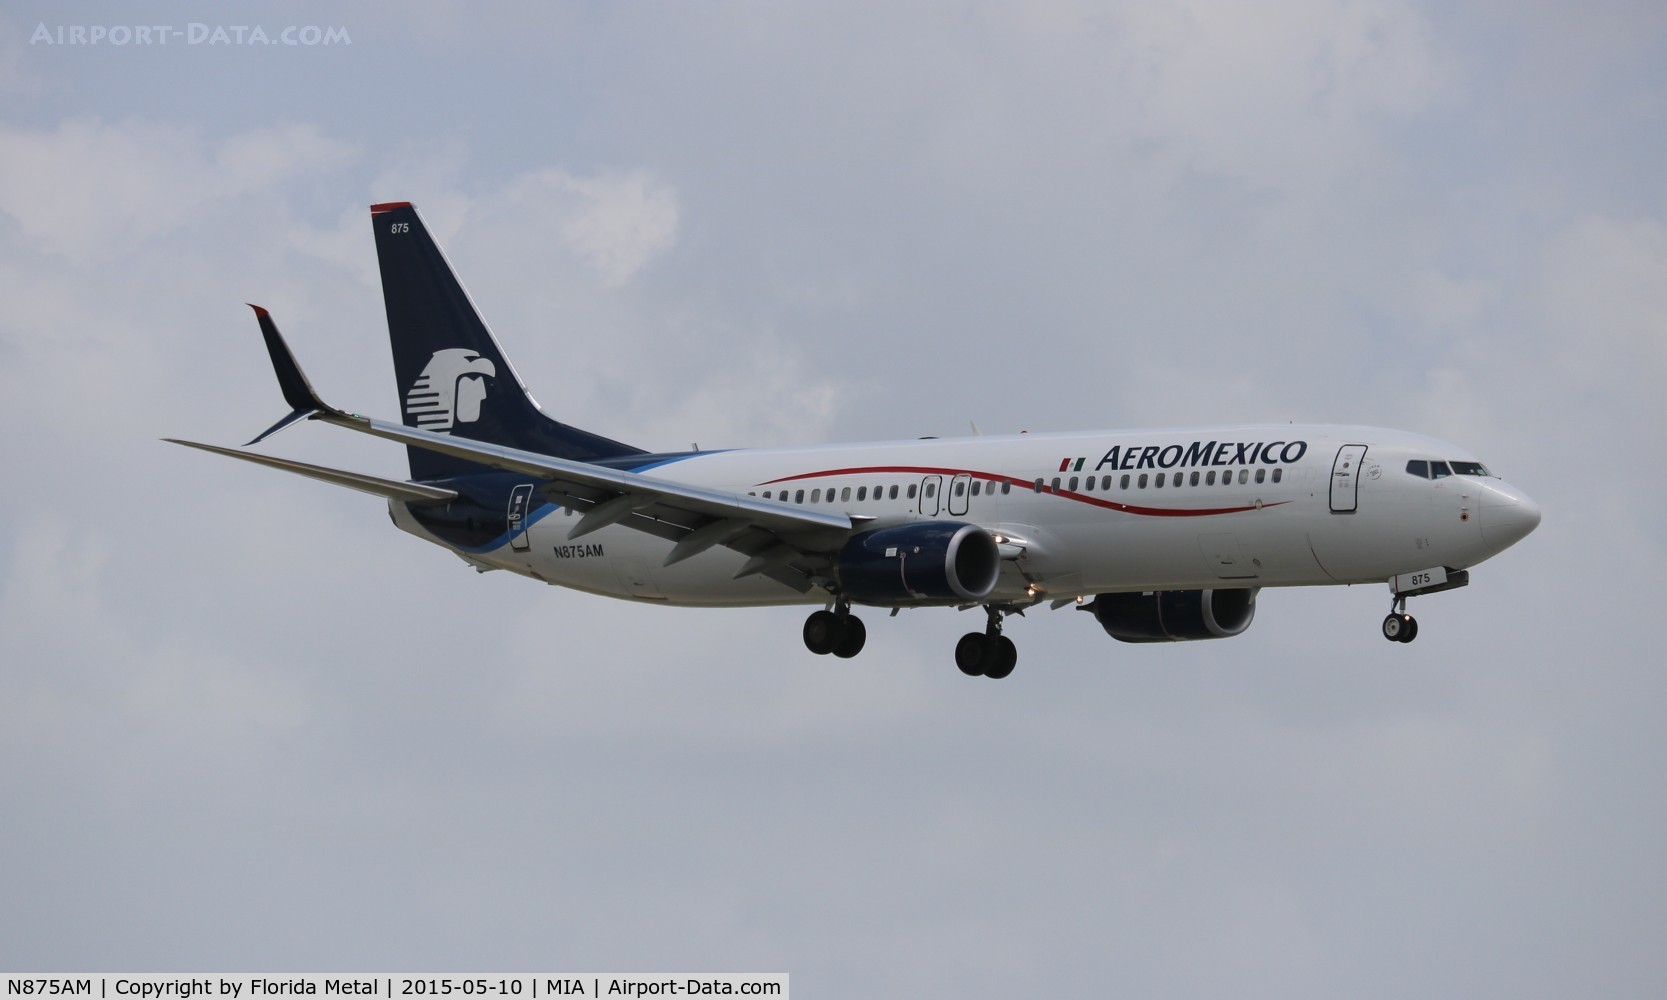 N875AM, 2014 Boeing 737-852 C/N 36705, Aeromexico